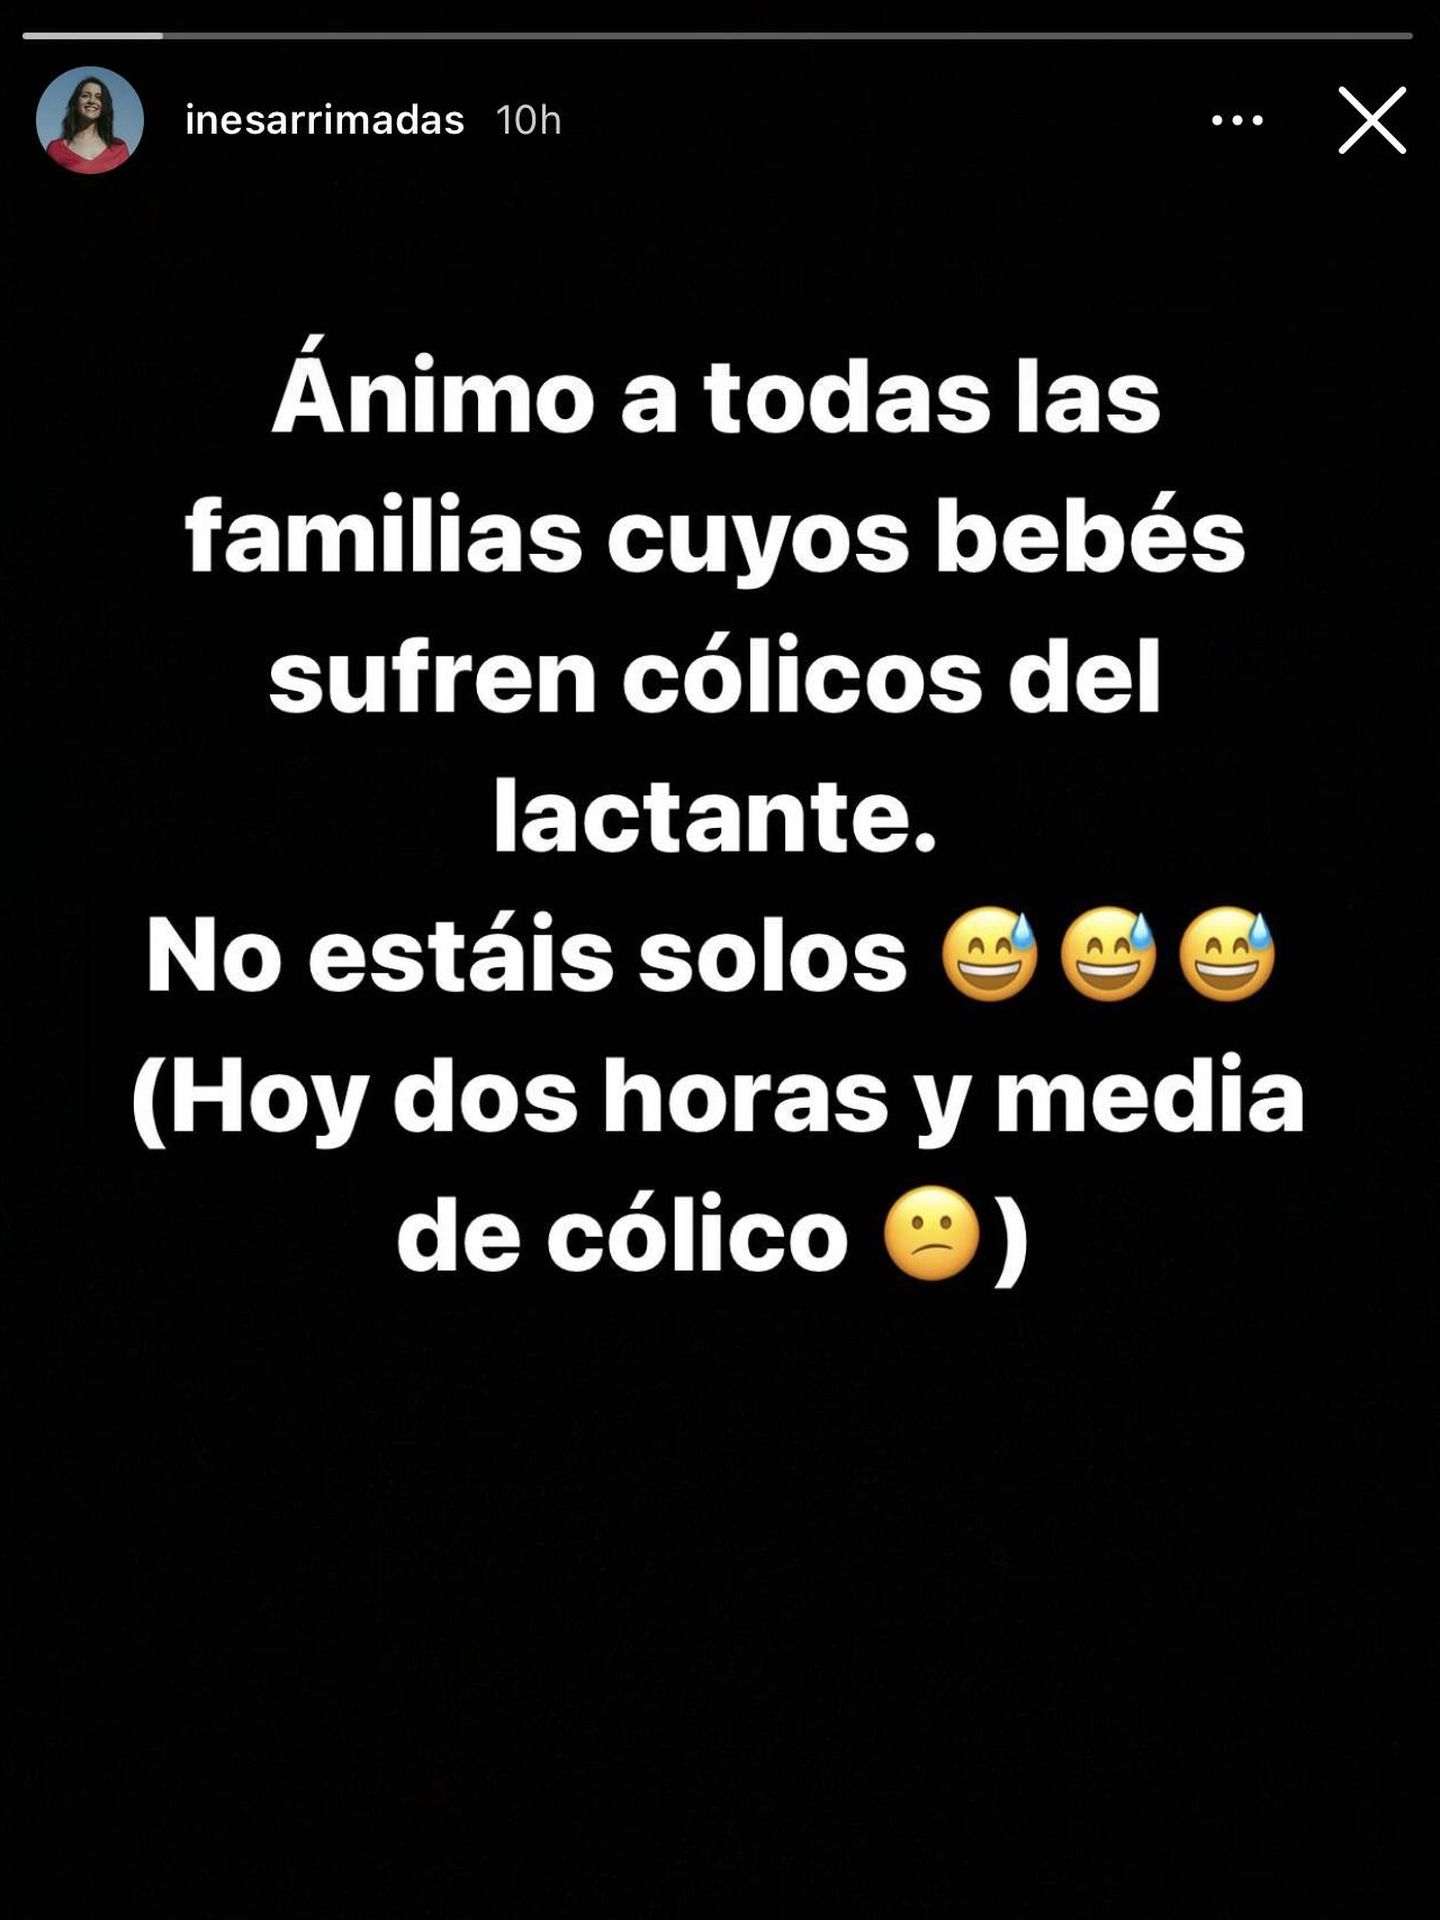 El mensaje de Inés Arrimadas en redes. (Instagram/@inesarrimadas)